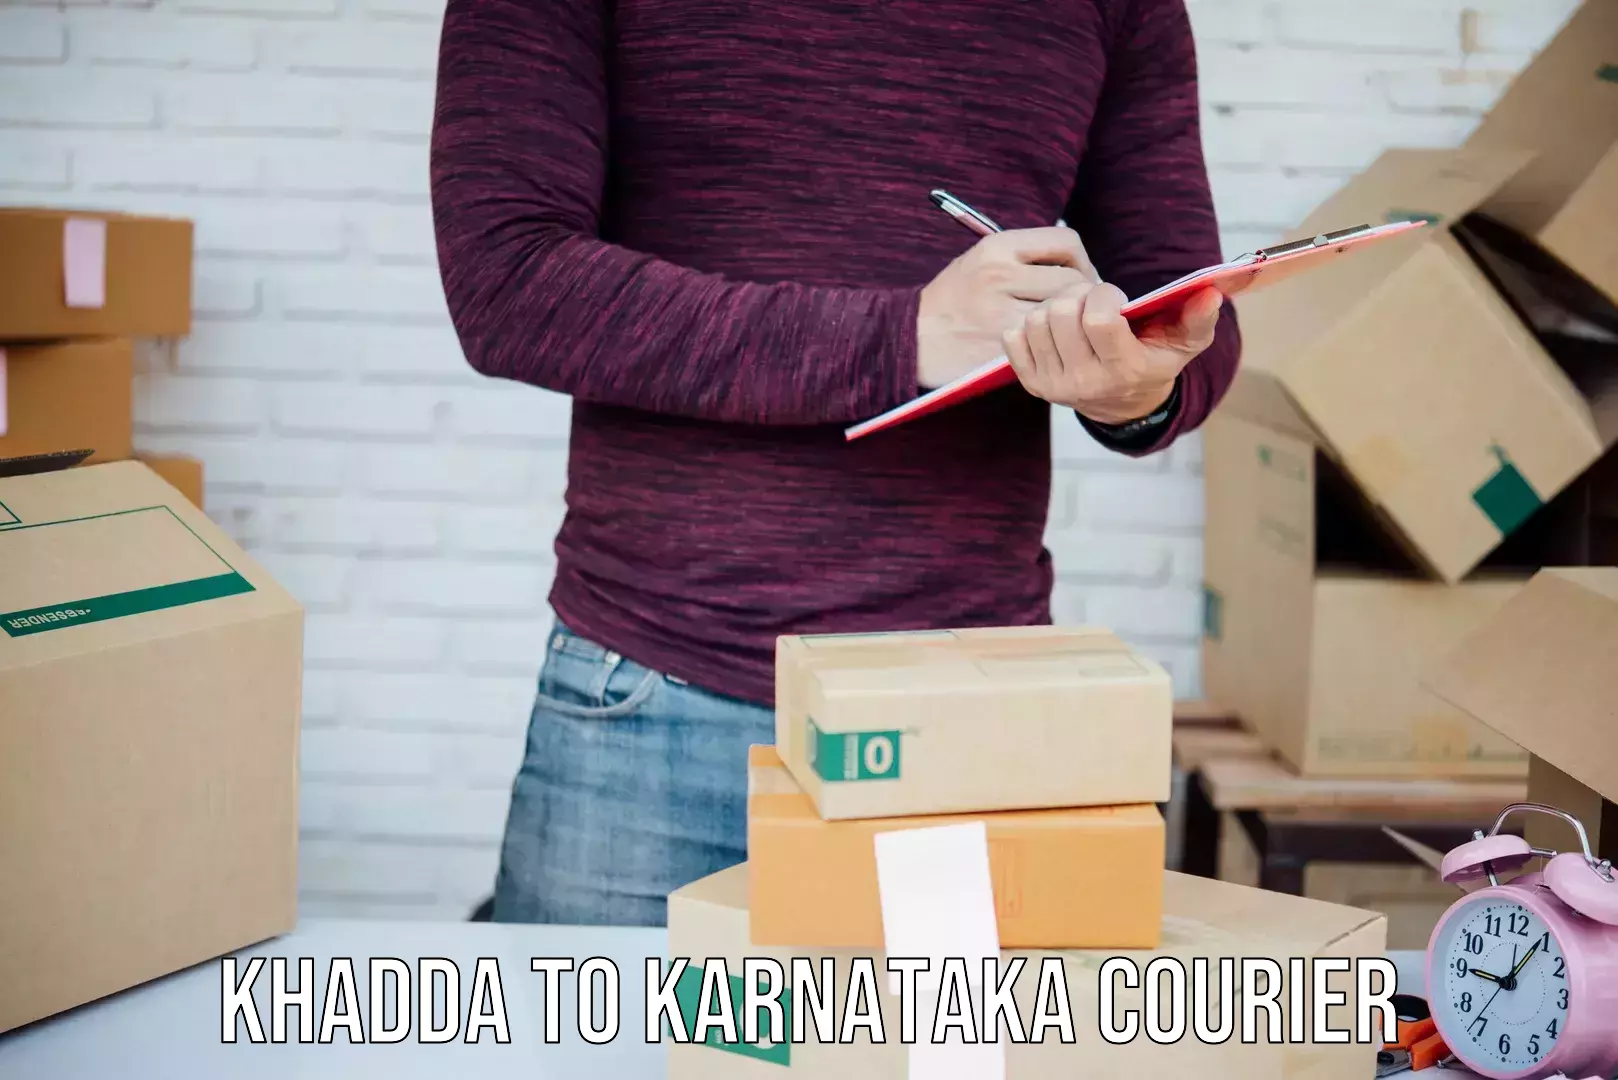 Comprehensive delivery network Khadda to Bangalore